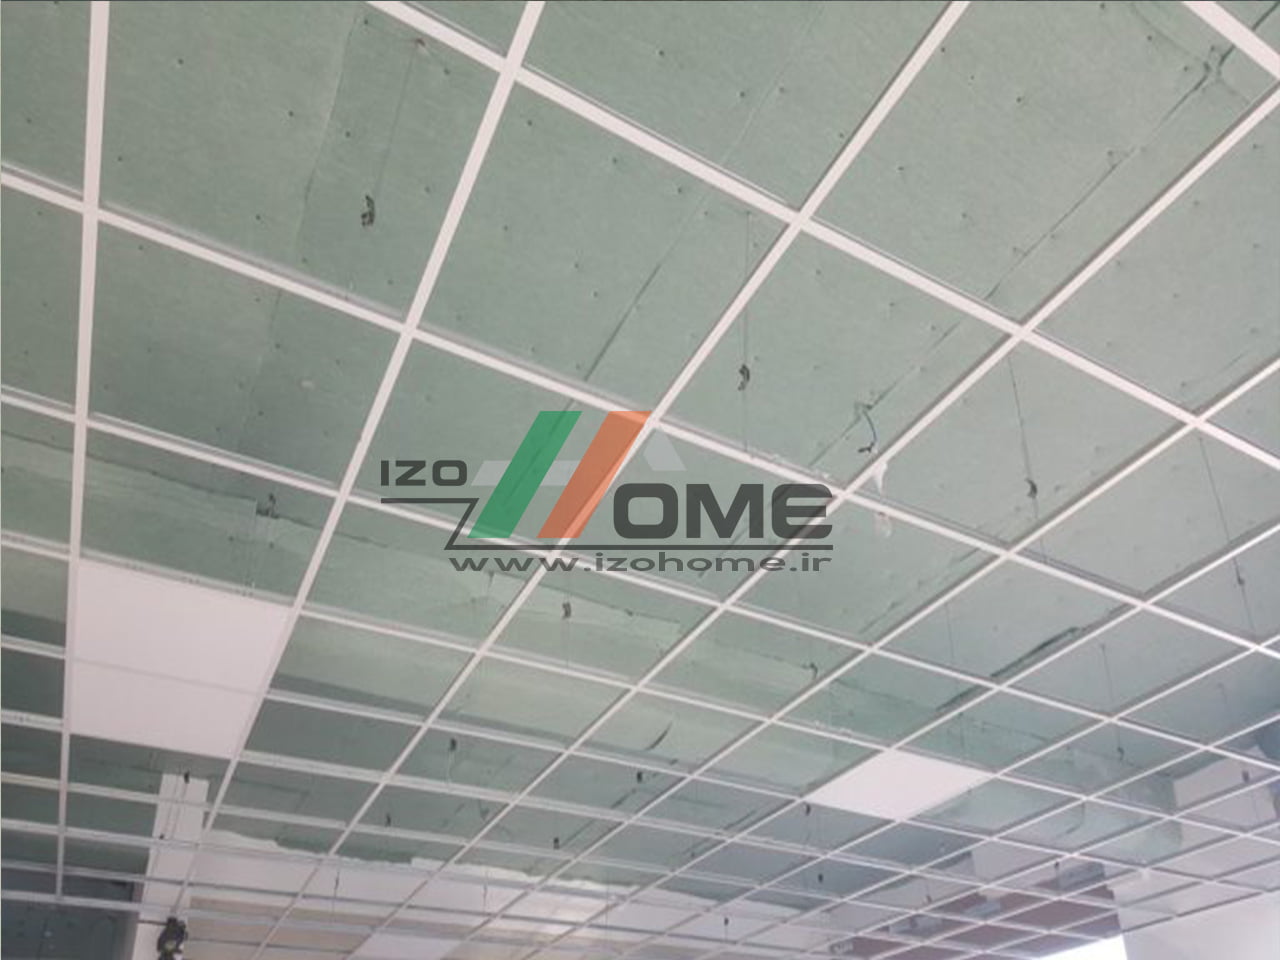 izohome44 - Sound insulation for the ceiling